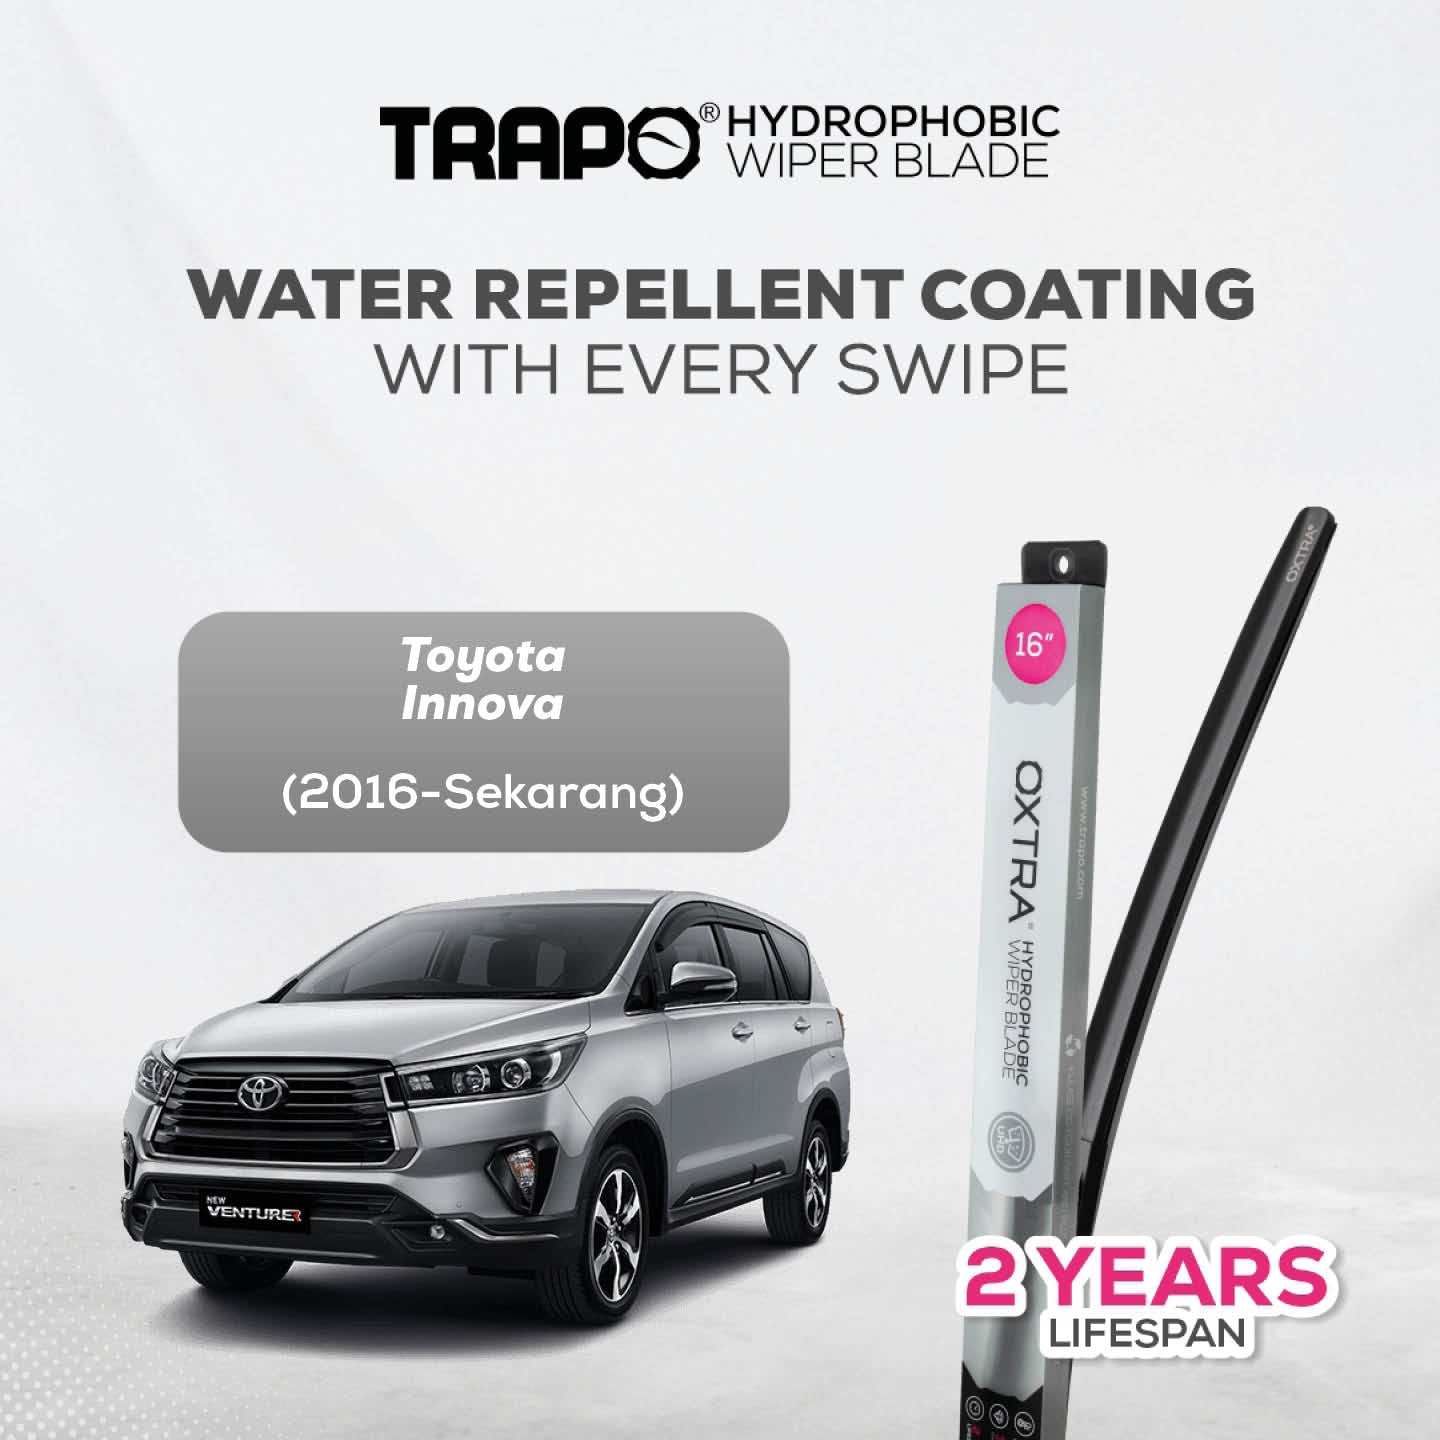 Trapo Hydrophobic Wiper Blade Toyota Innova (2016-Sekarang)